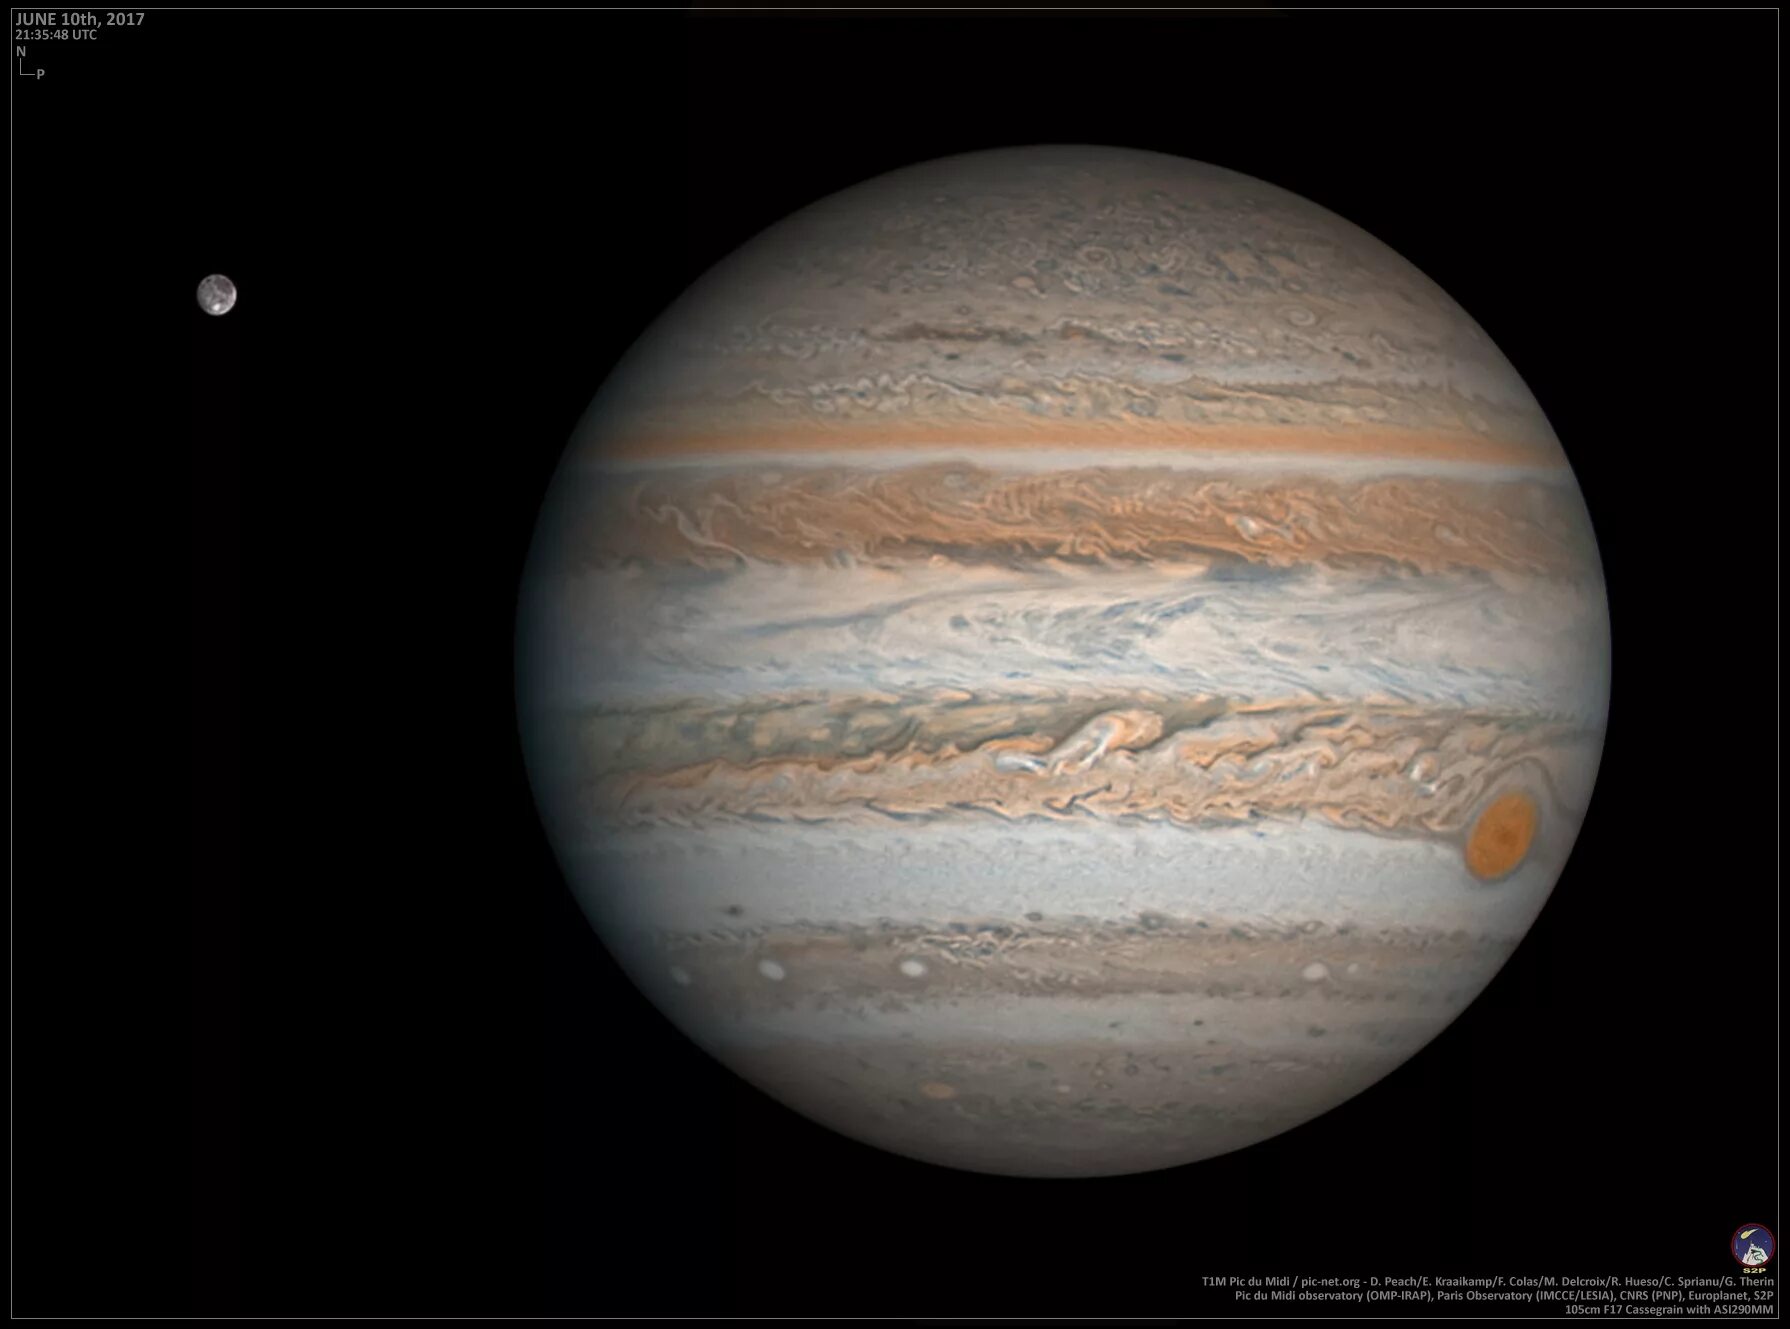 Во сколько раз юпитер больше сатурна